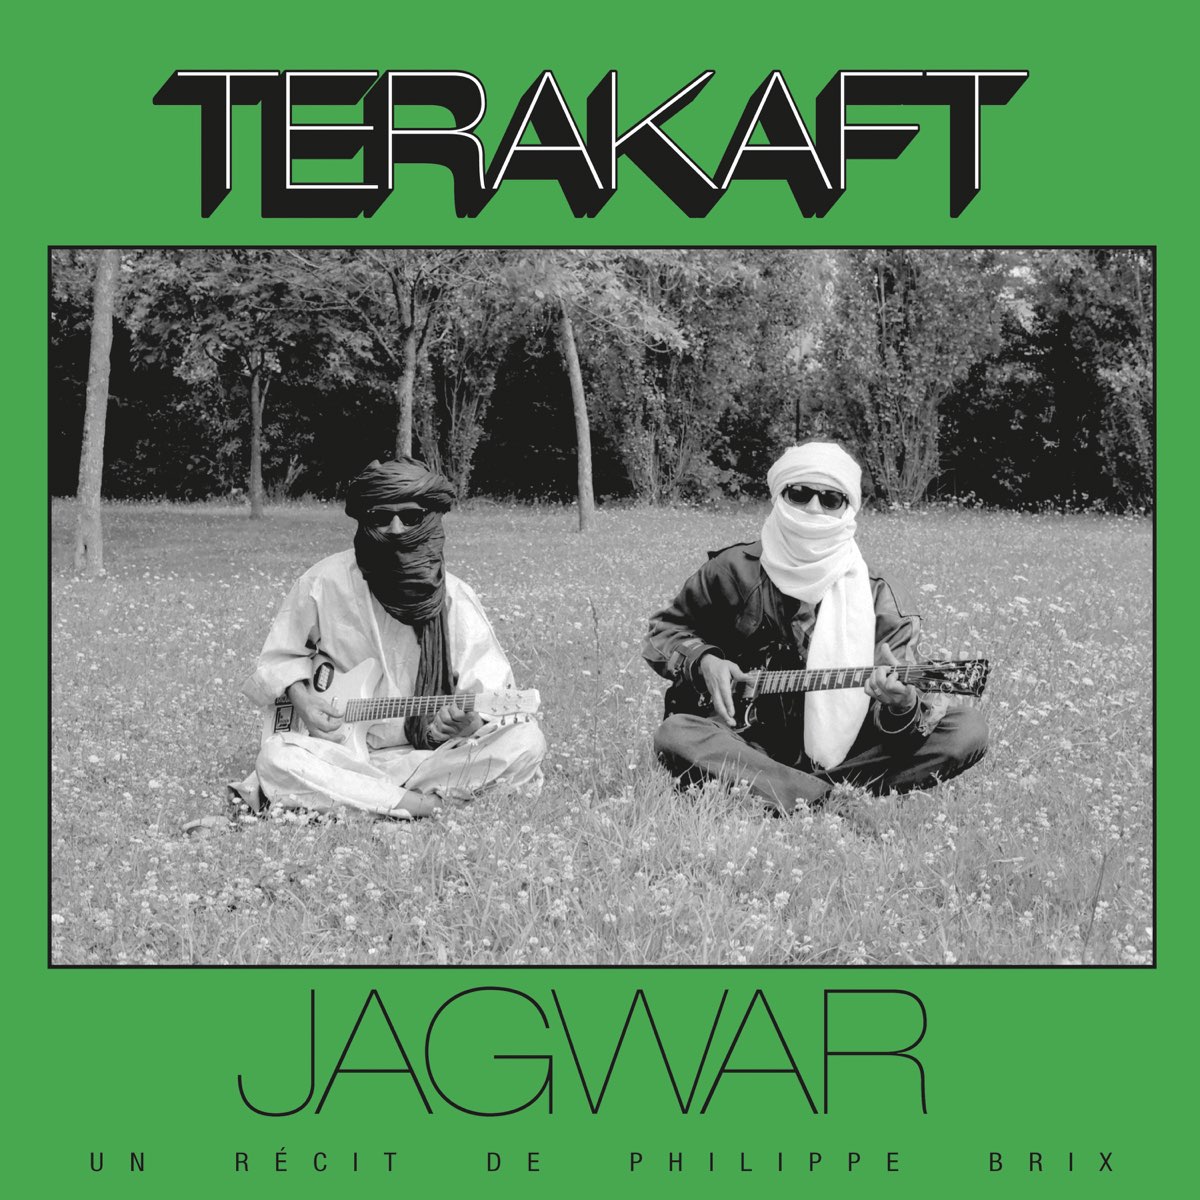 Terakaft. Terakaft Amazzagh. Terakaft Википедия. Картинка песни Jagwar.